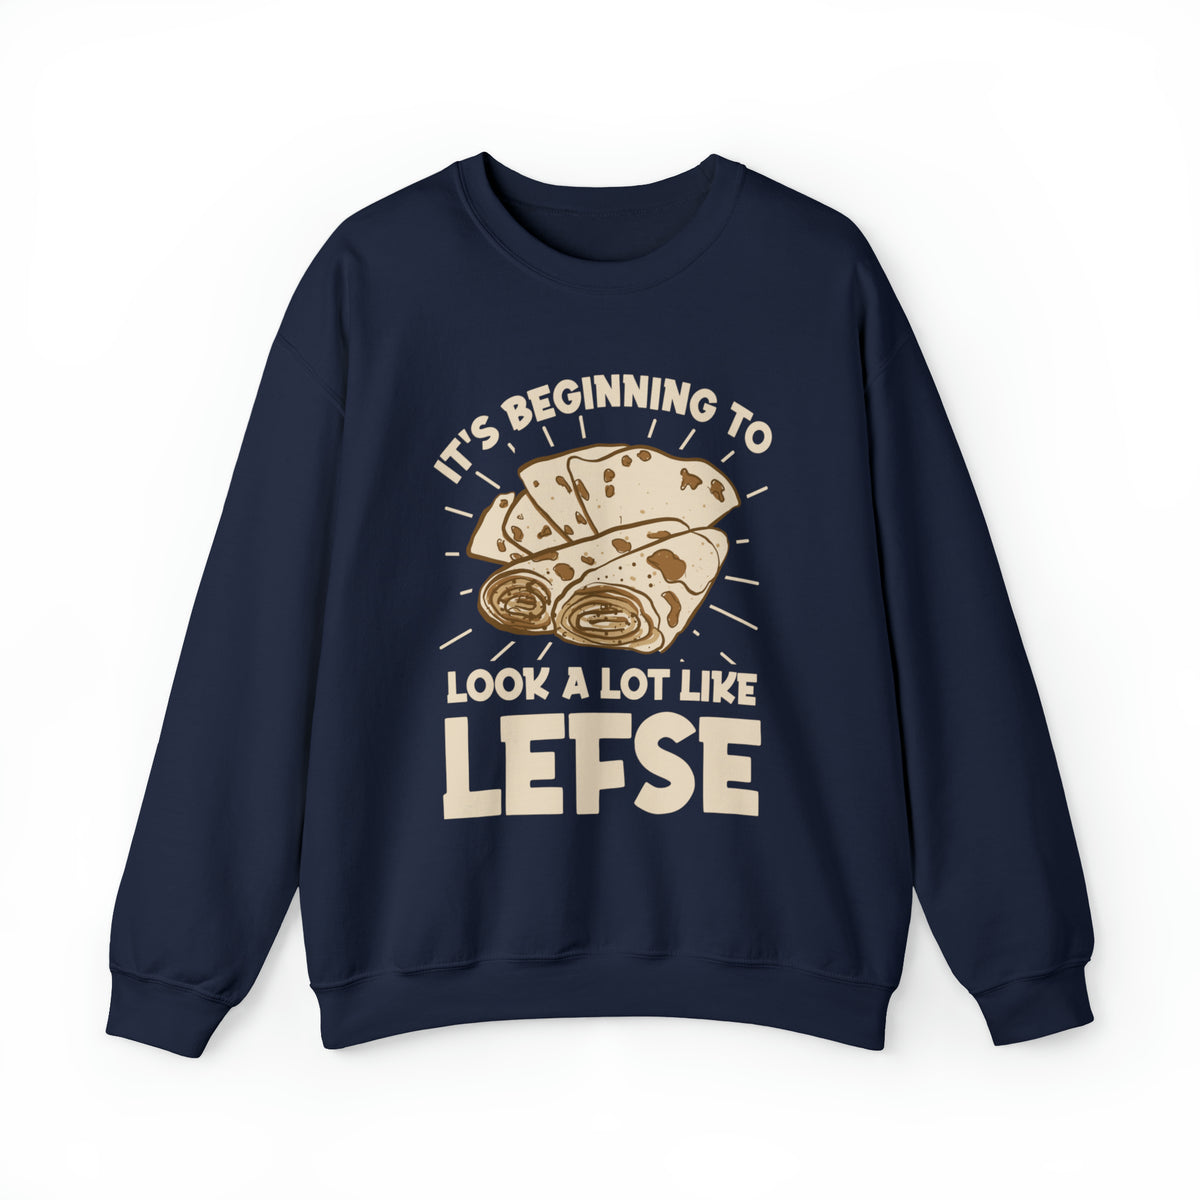 Norwegian Lefse Funny Holiday Baking Shirt | Baker Gift | Unisex Crewneck Sweatshirt